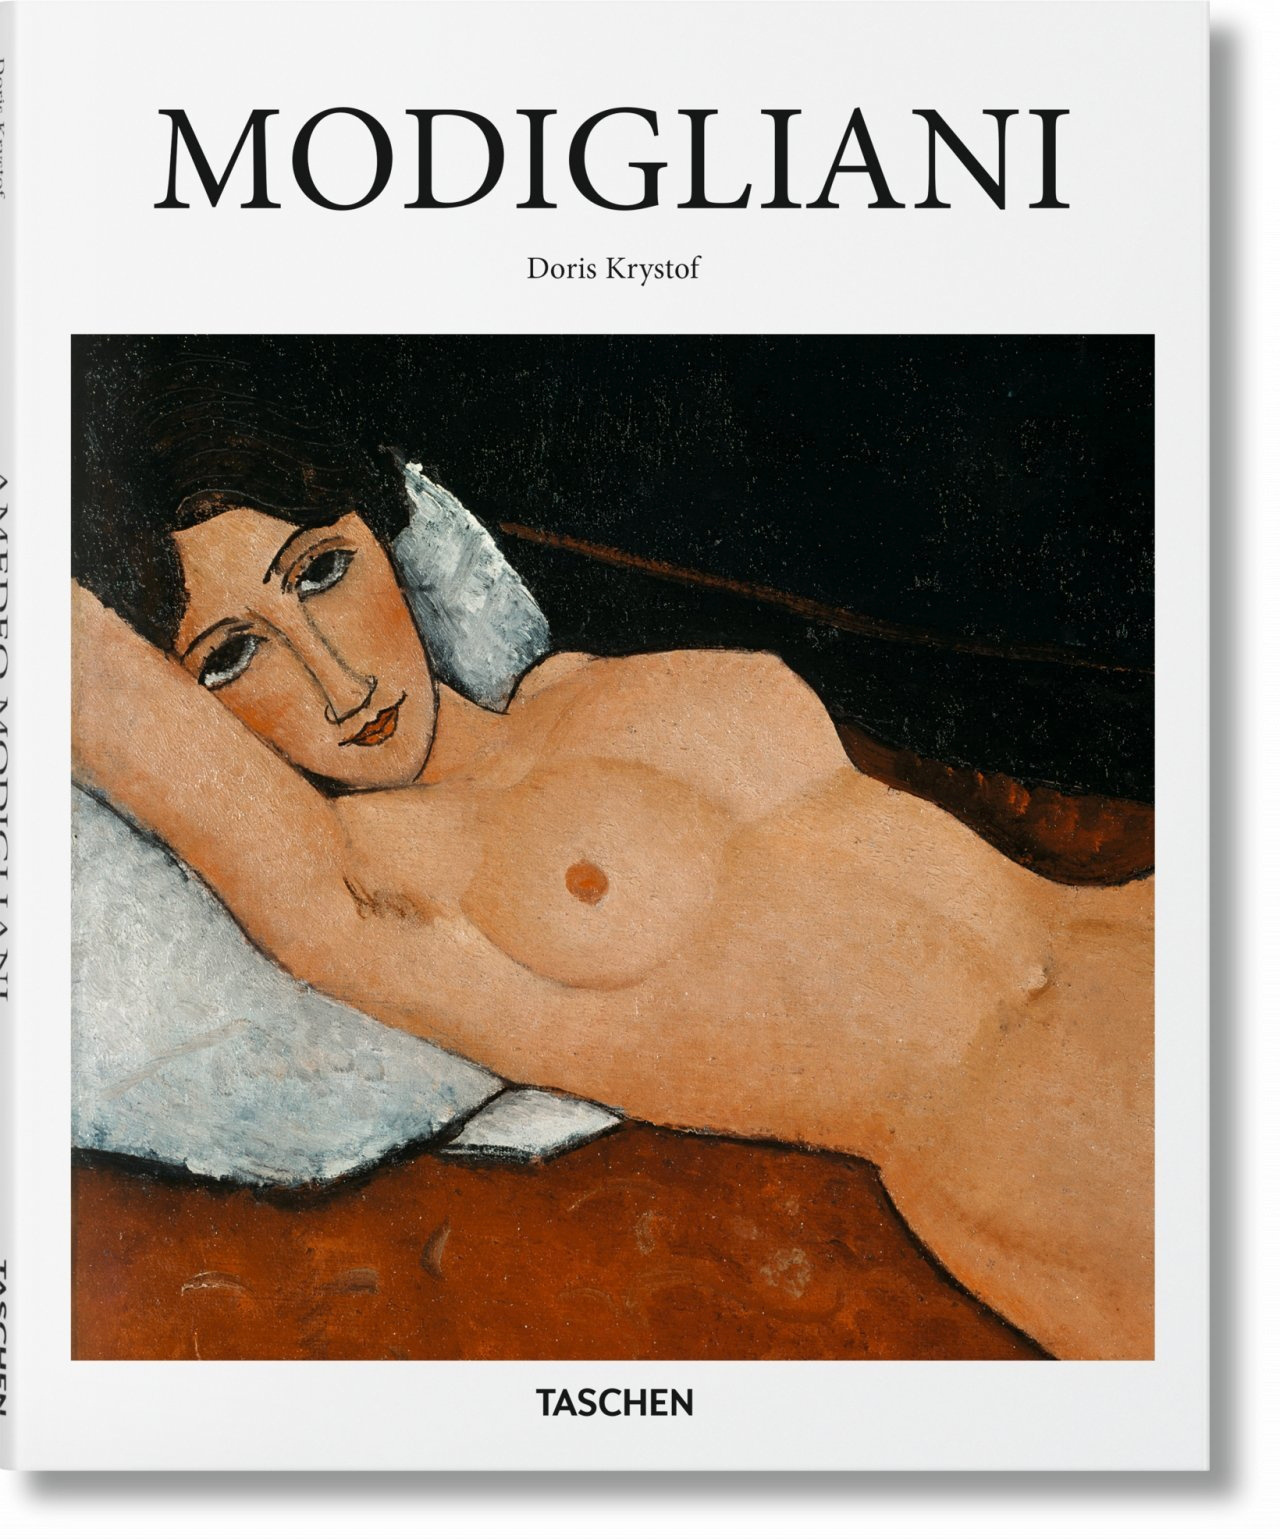 Amadeo Modigliani 